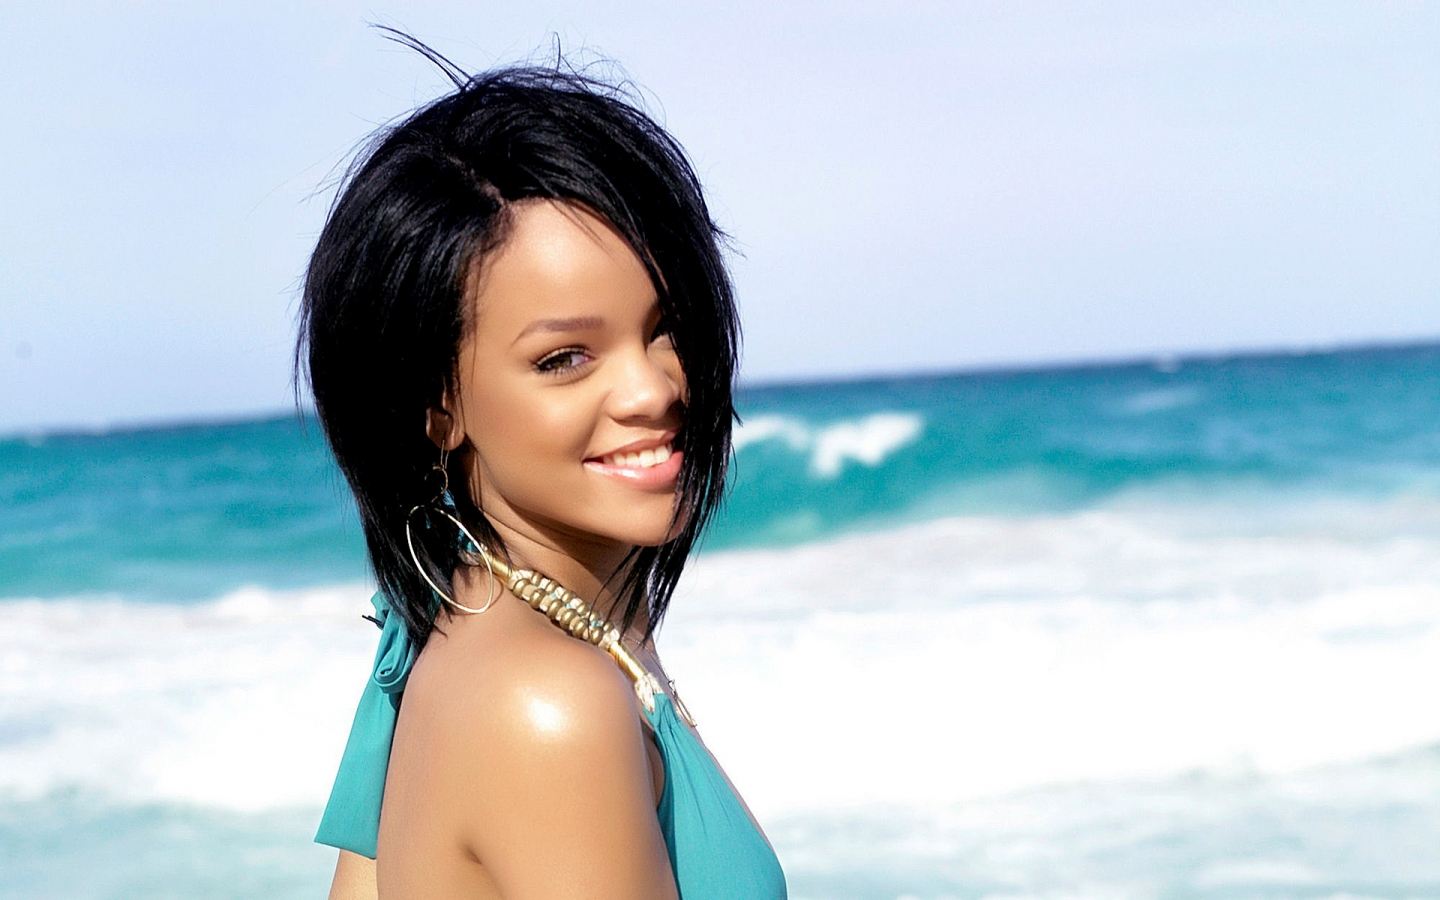 Happy Rihanna for 1440 x 900 widescreen resolution